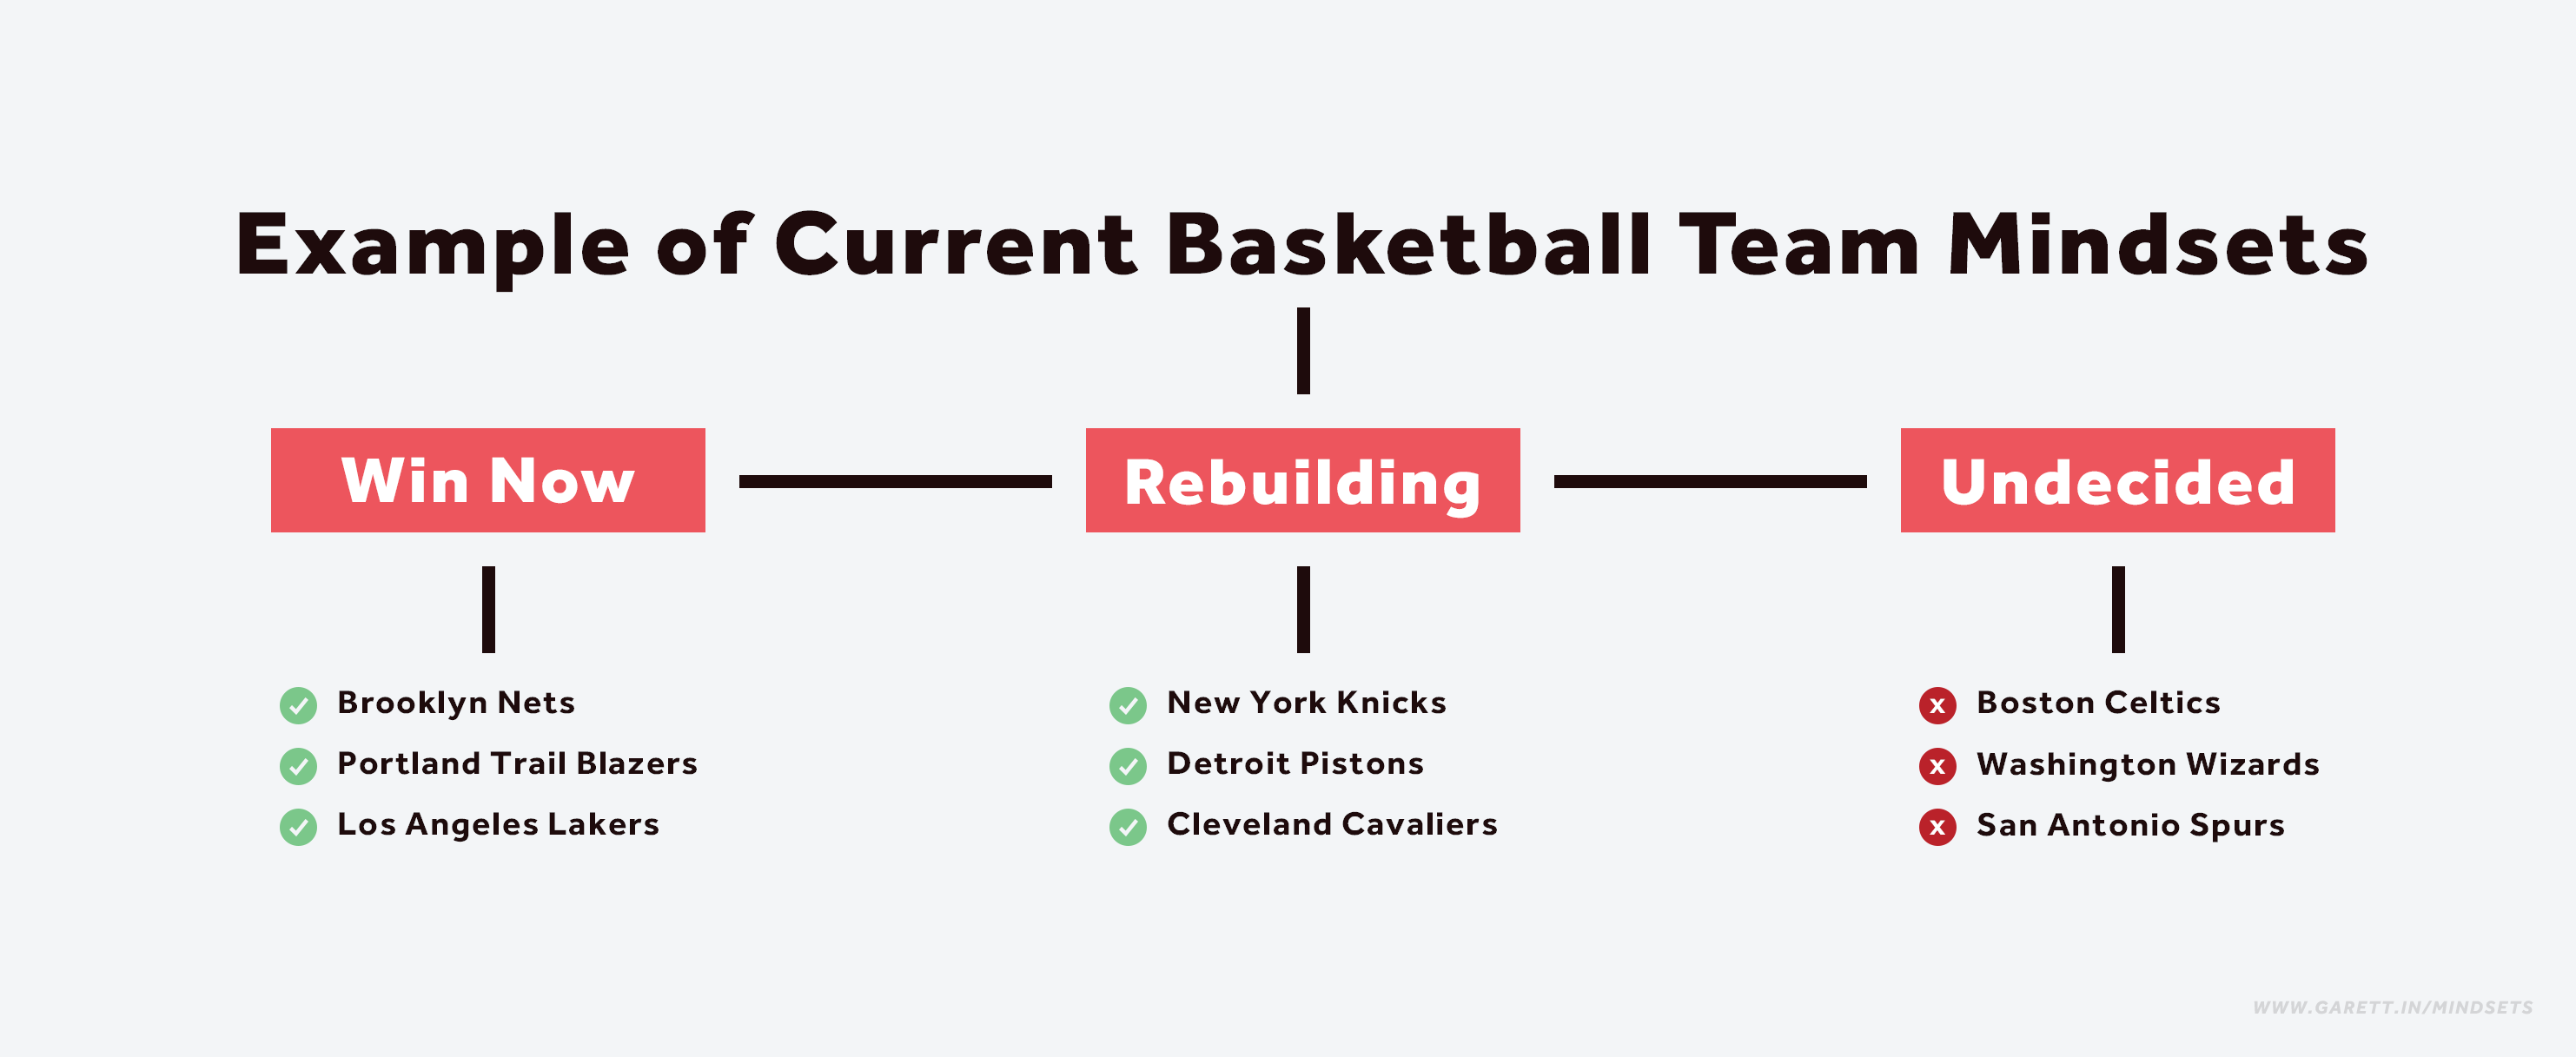 Basketball Team Mindsets based on the 2020-2021 Season